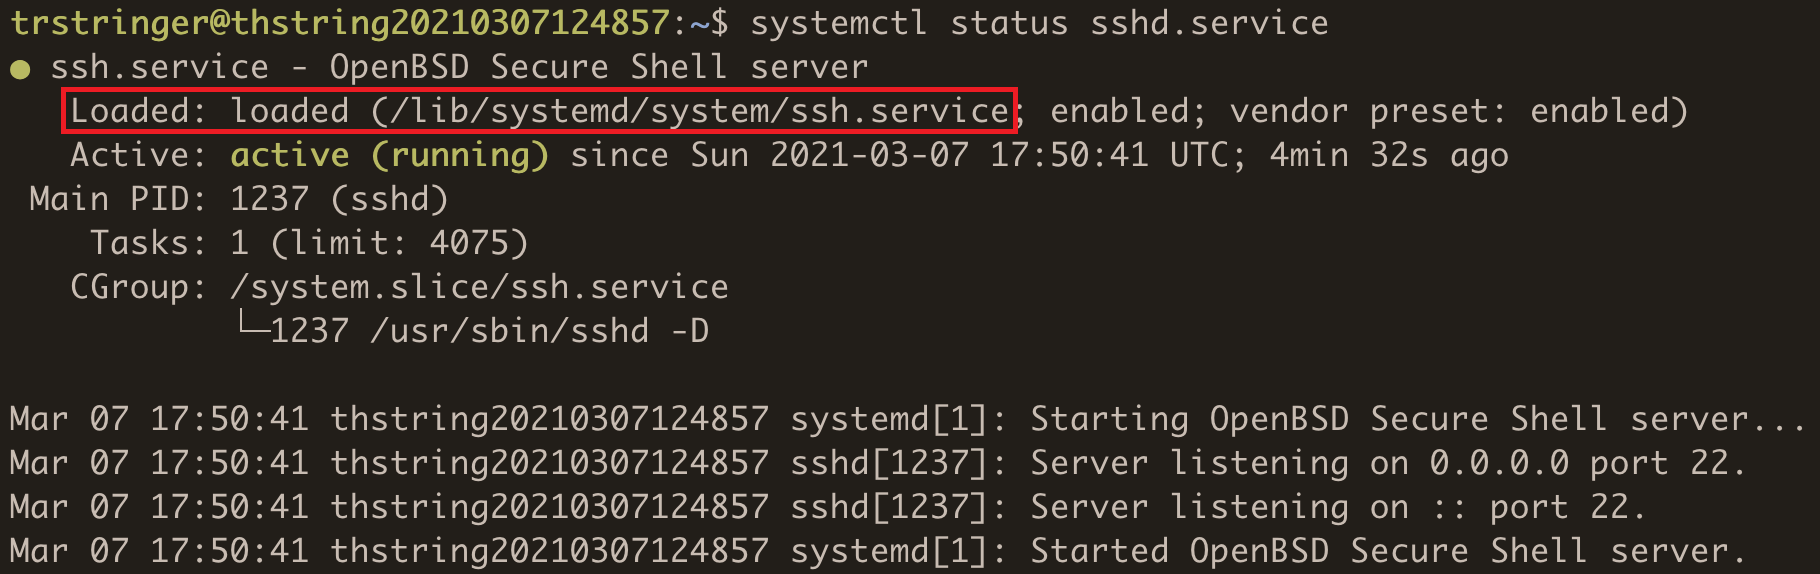 ssh.service status loaded